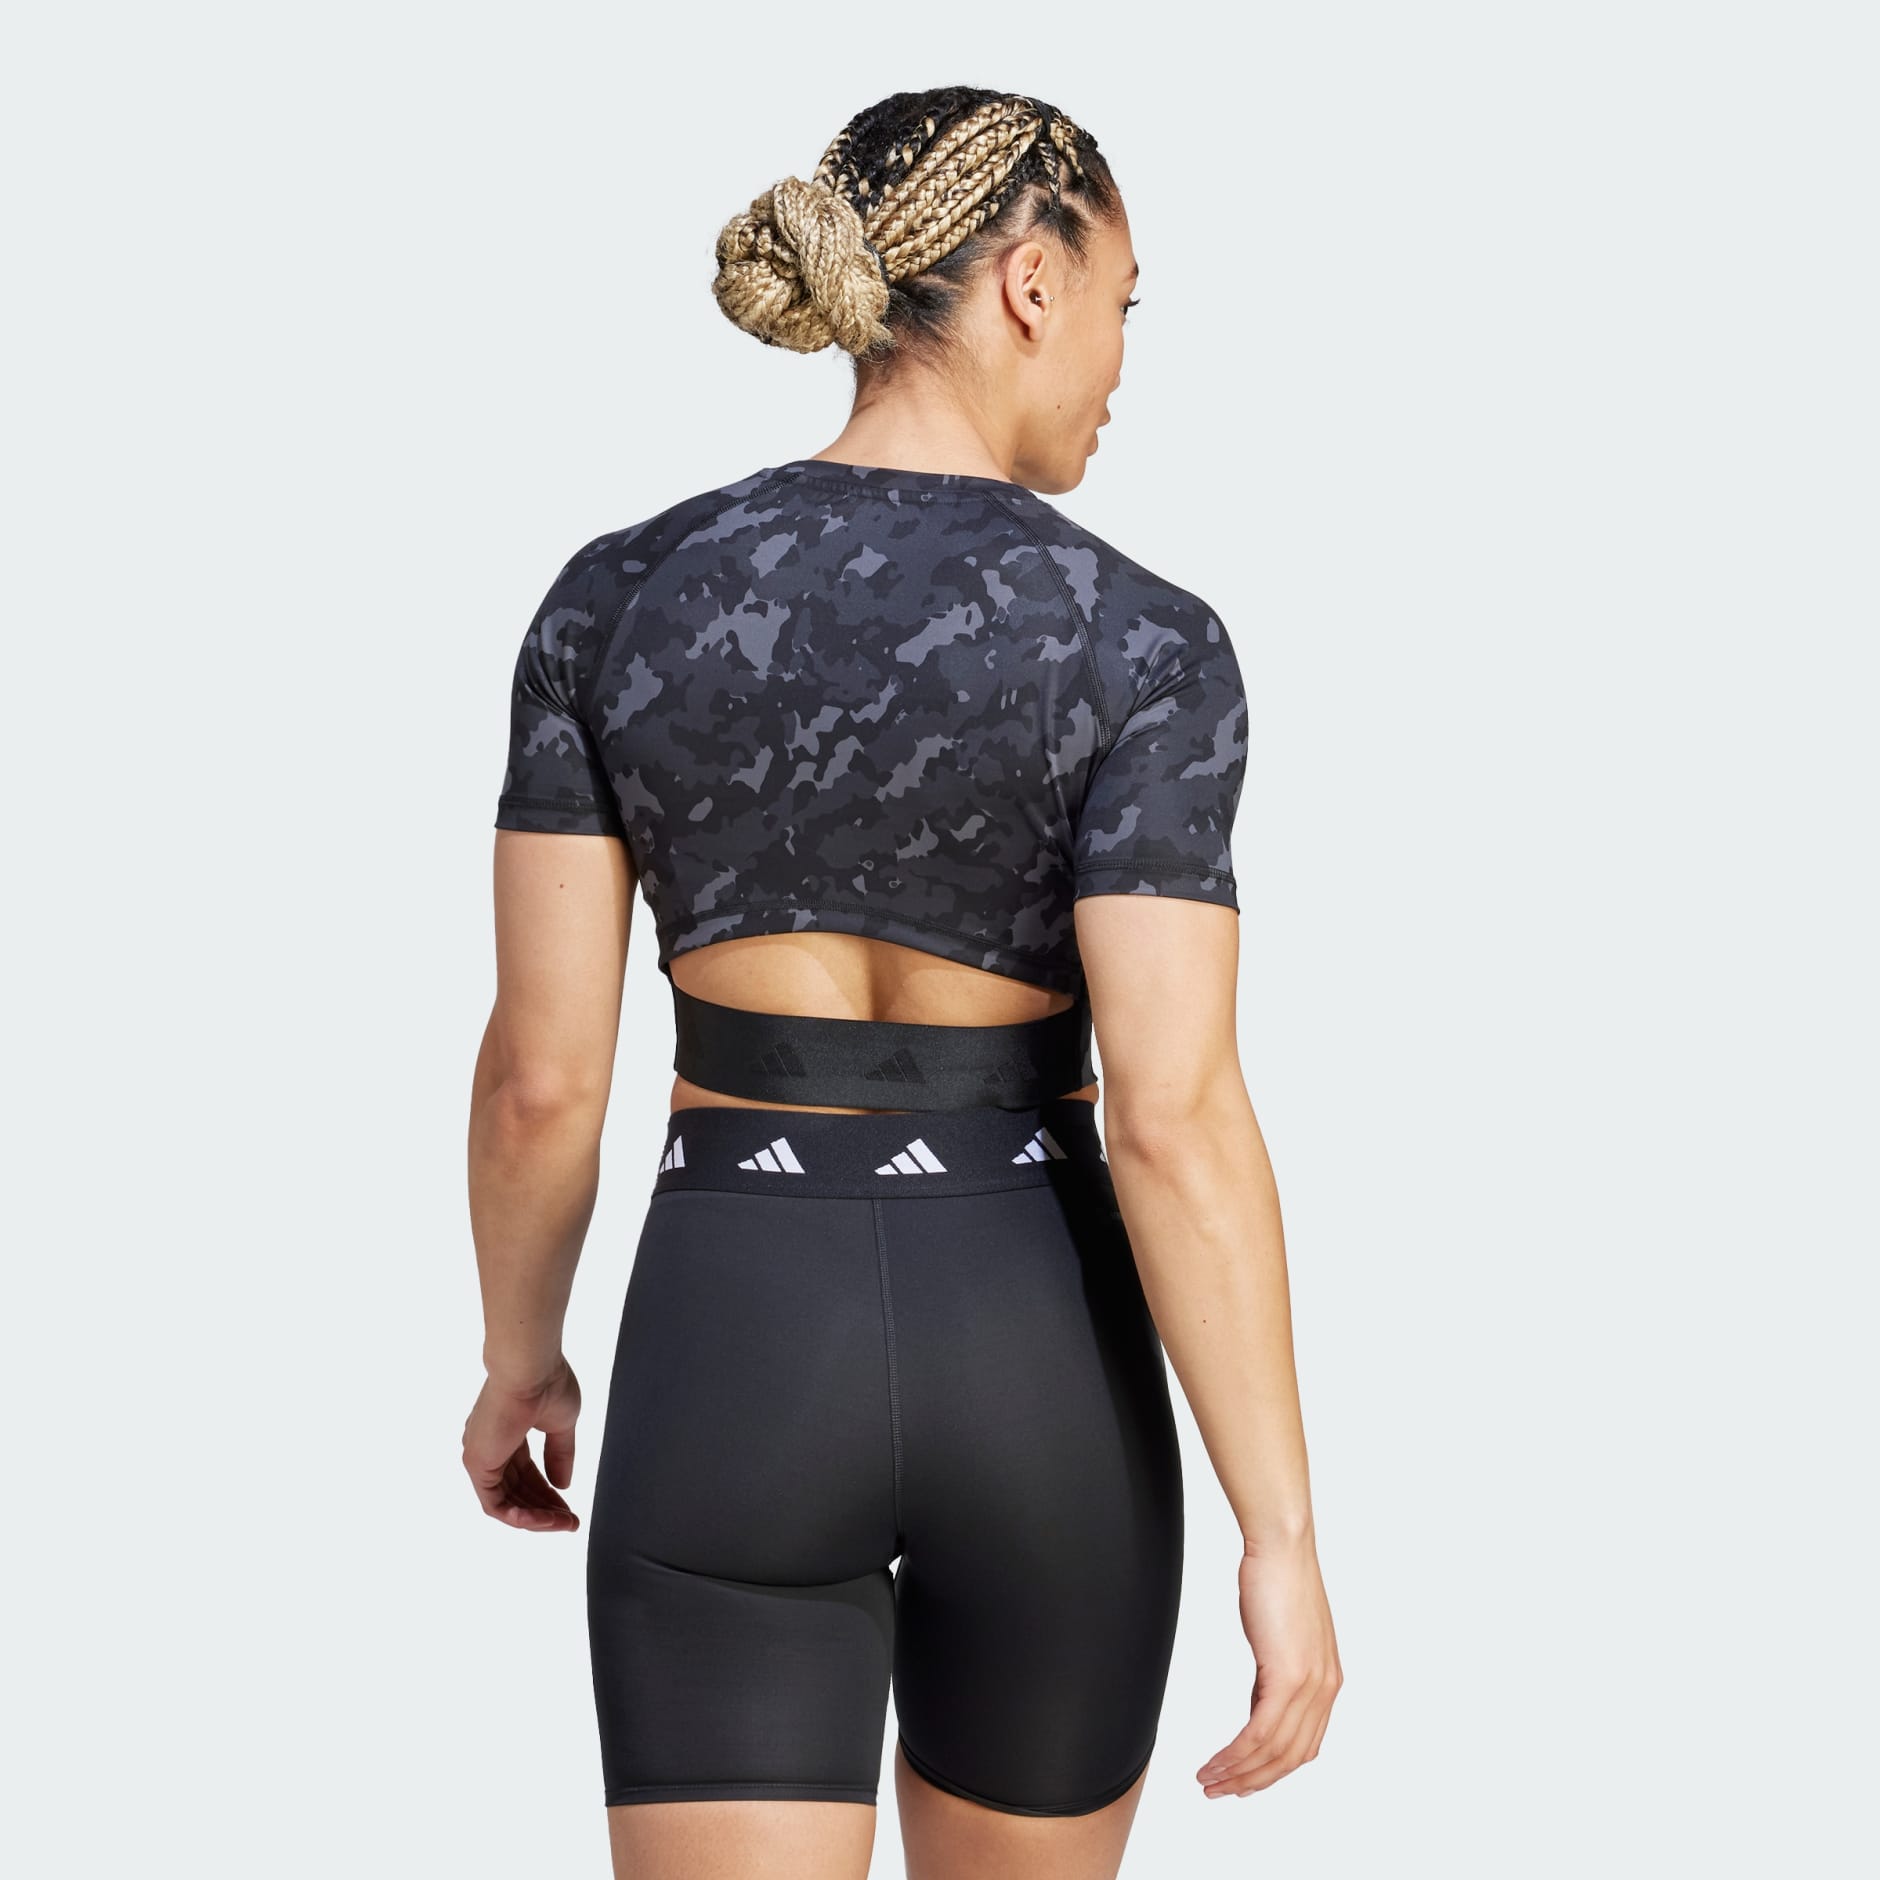 Techfit printed cropped sports leggings, black, Adidas Performance